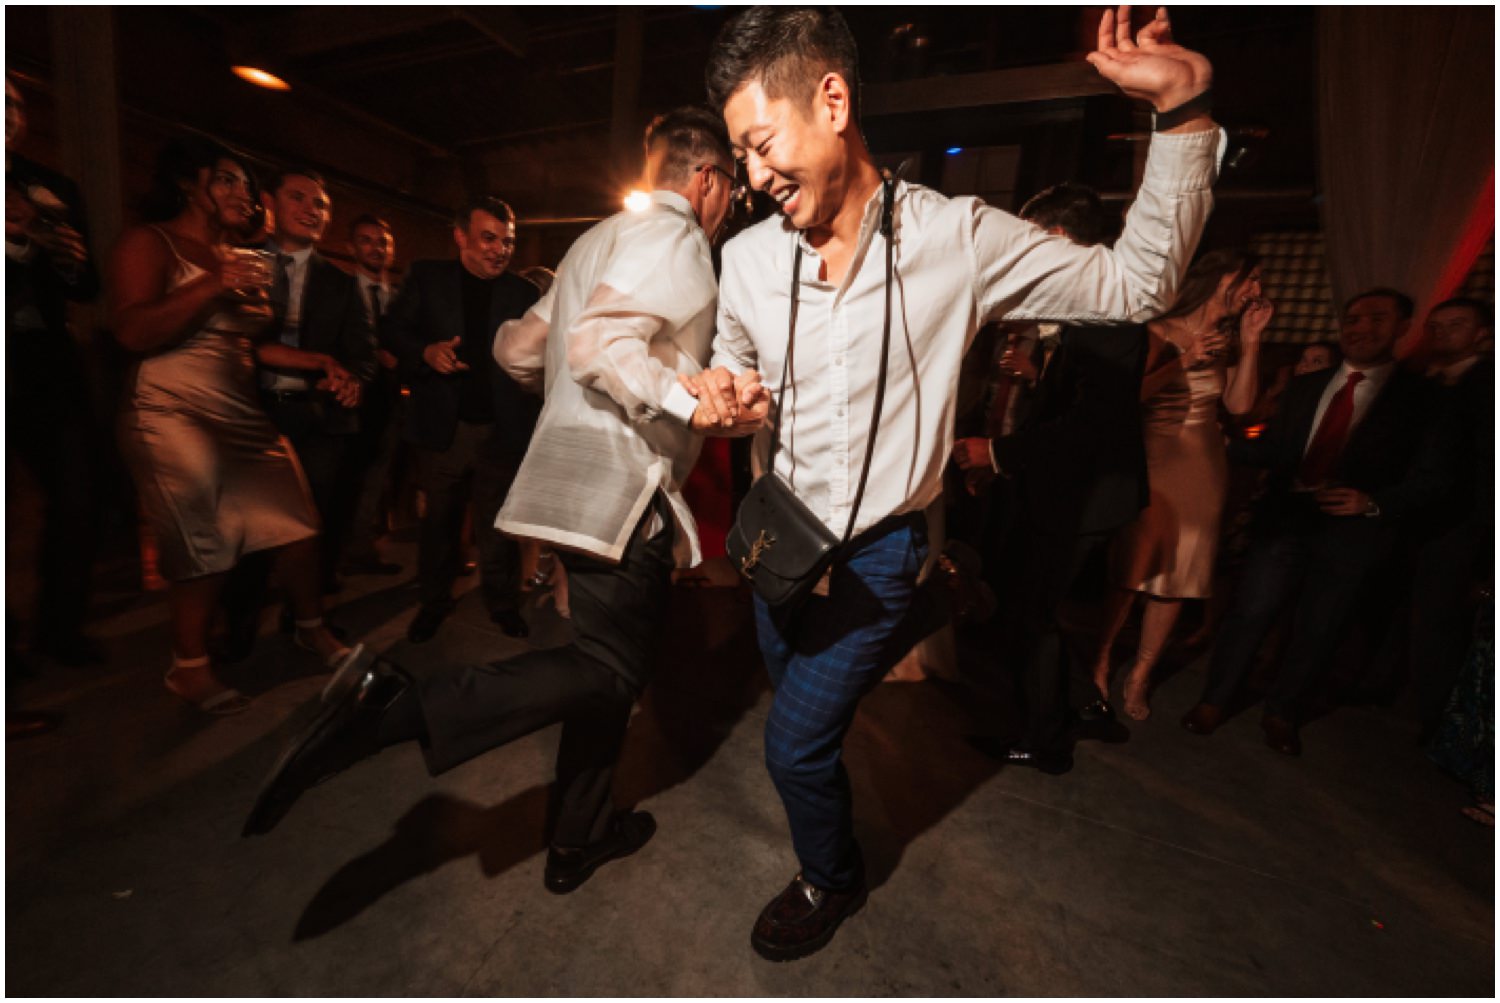 Fairlie Chicago Wedding Photos epic dance party